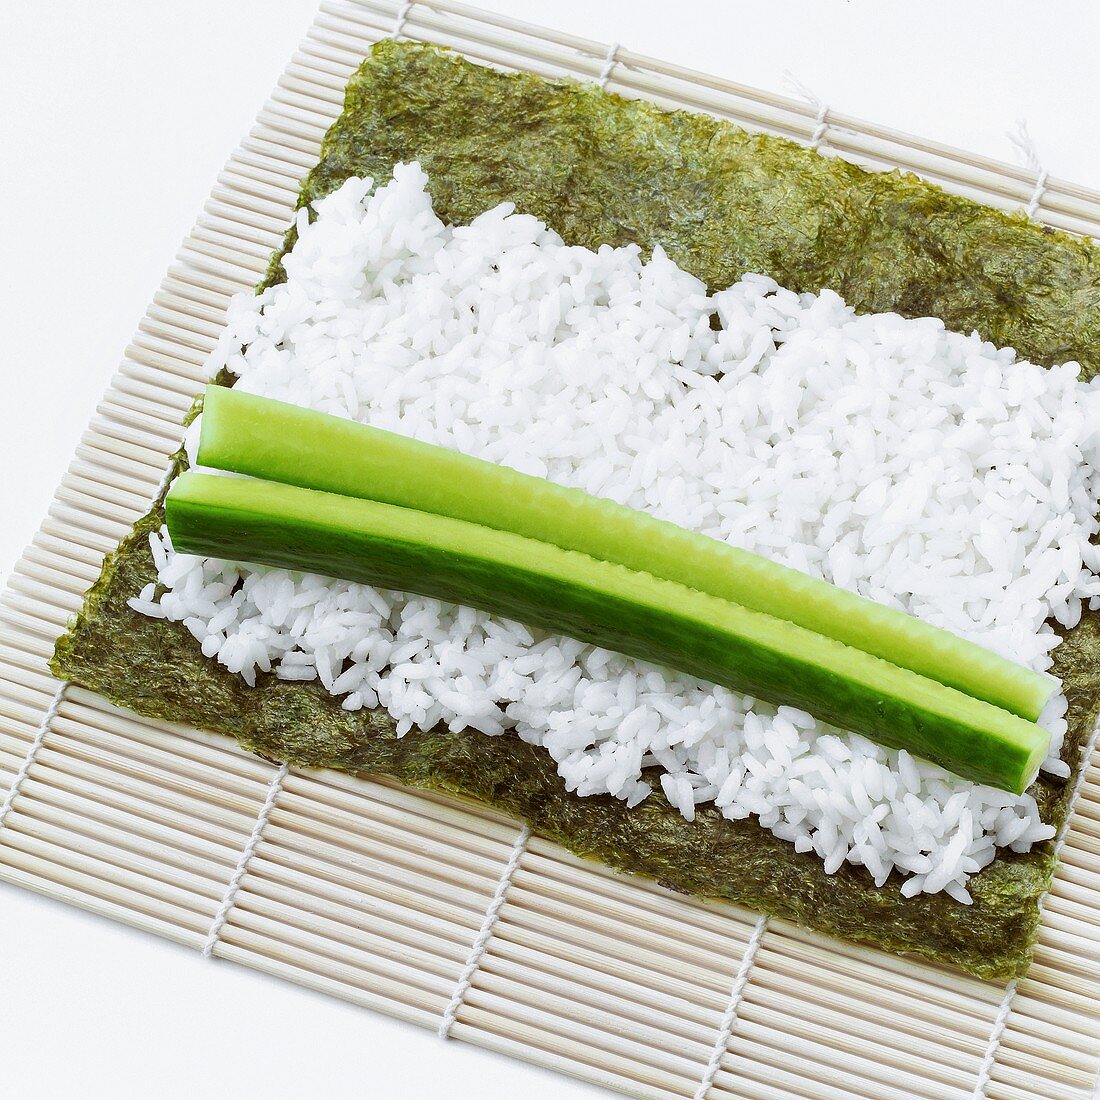 Making maki sushi with cucumber